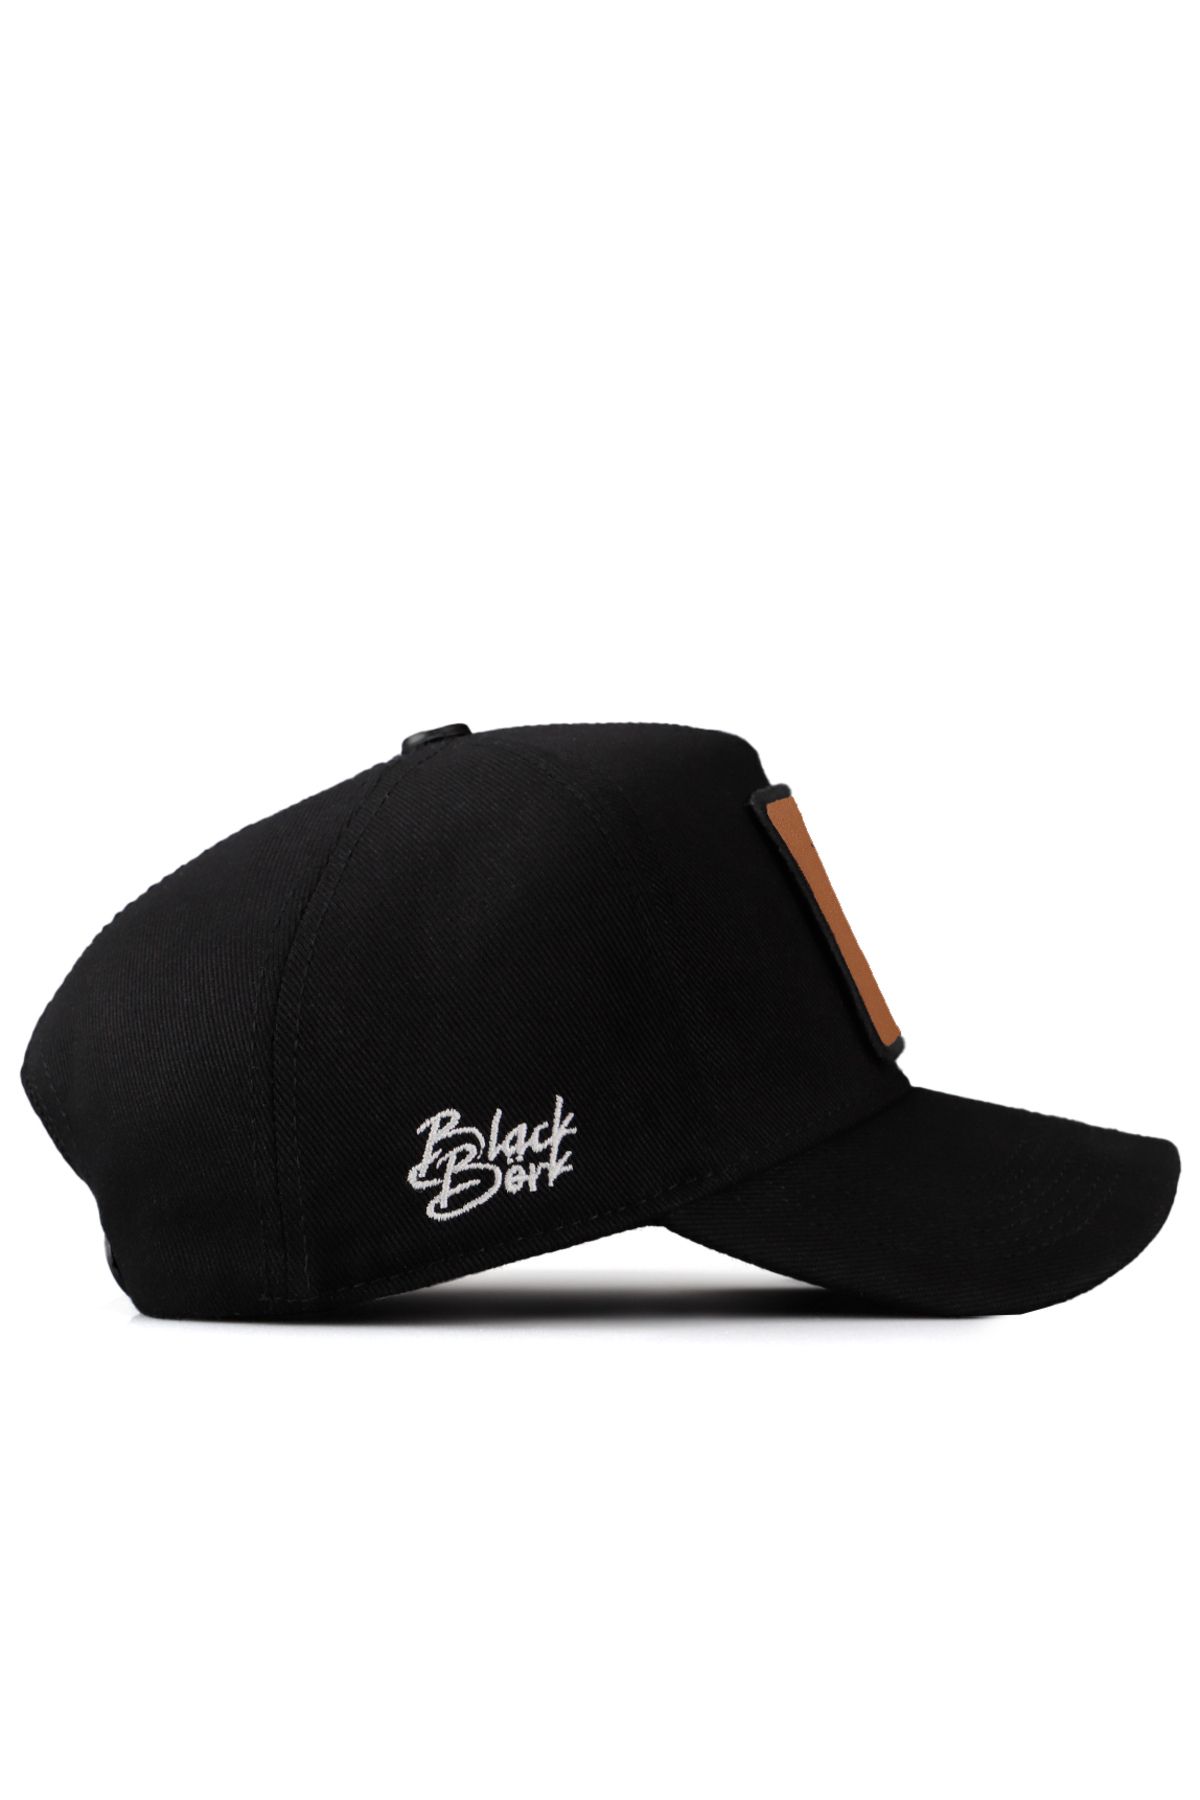 BlackBörk V1 Baseball Aslan - 13cs Kod Logolu Unisex Siyah Şapka (CAP)